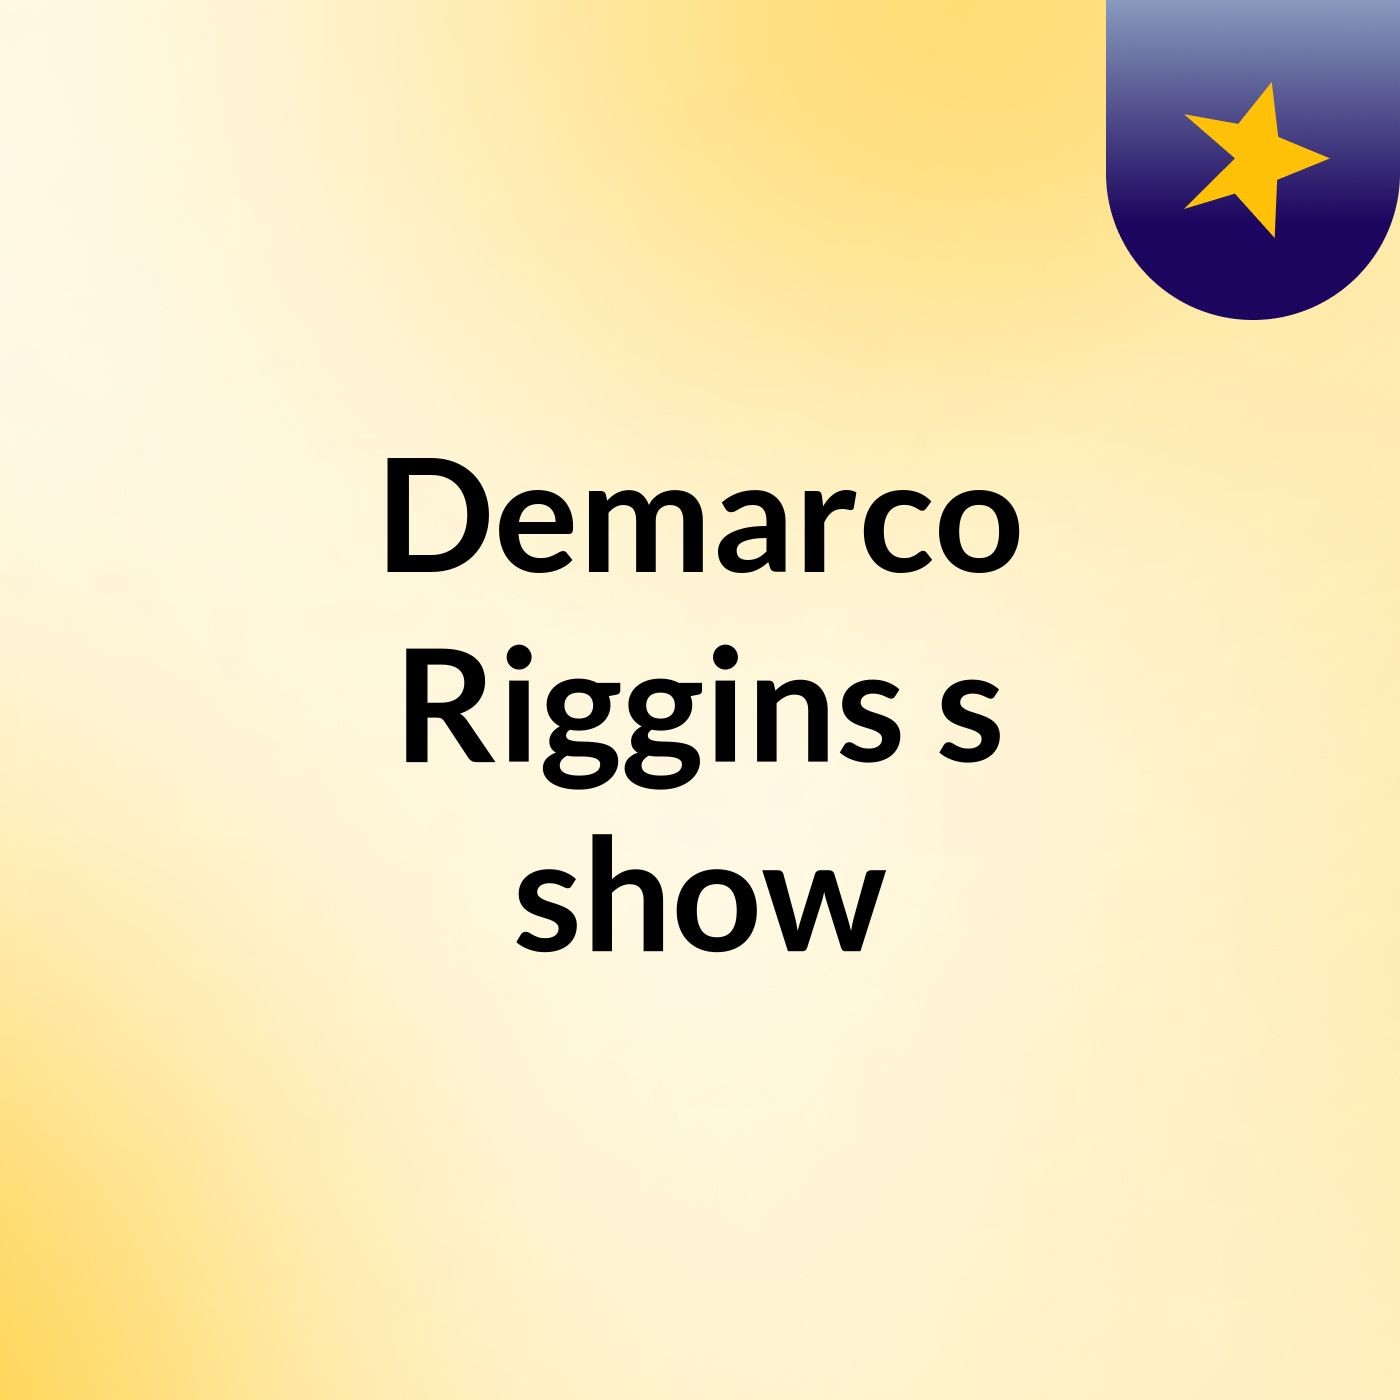 Episode 3 - Demarco Riggins's show